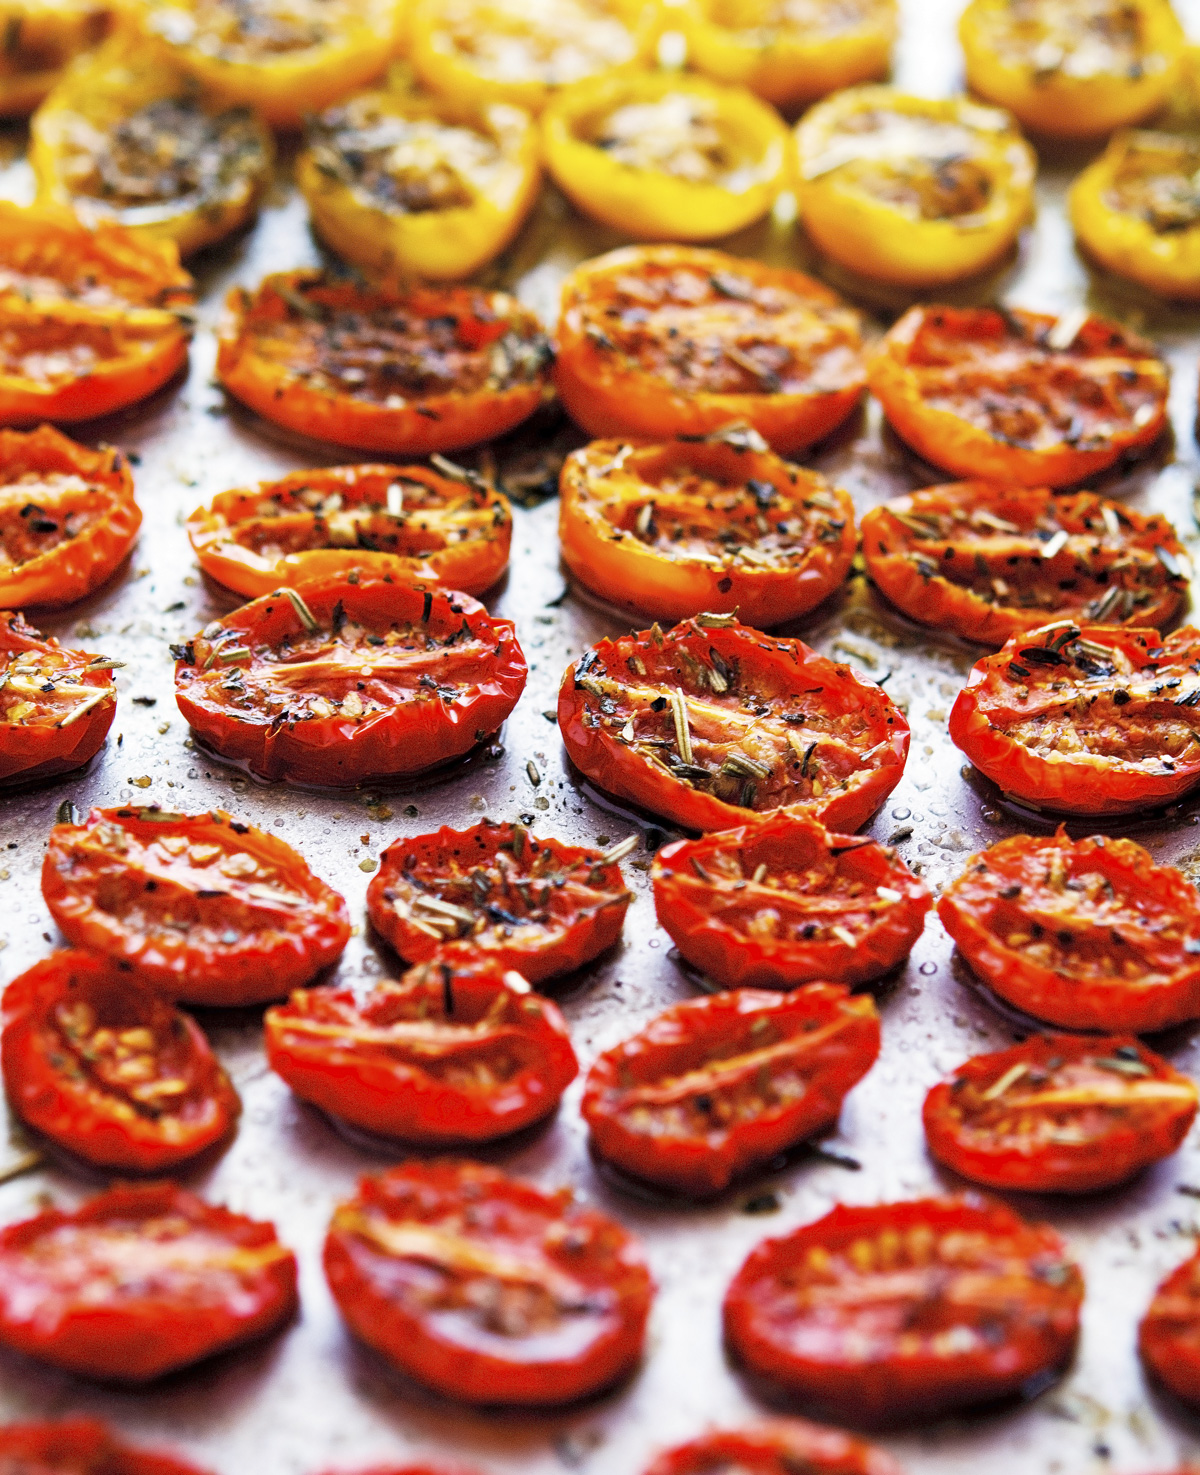 Provencal Slow-Roasted Tomatoes